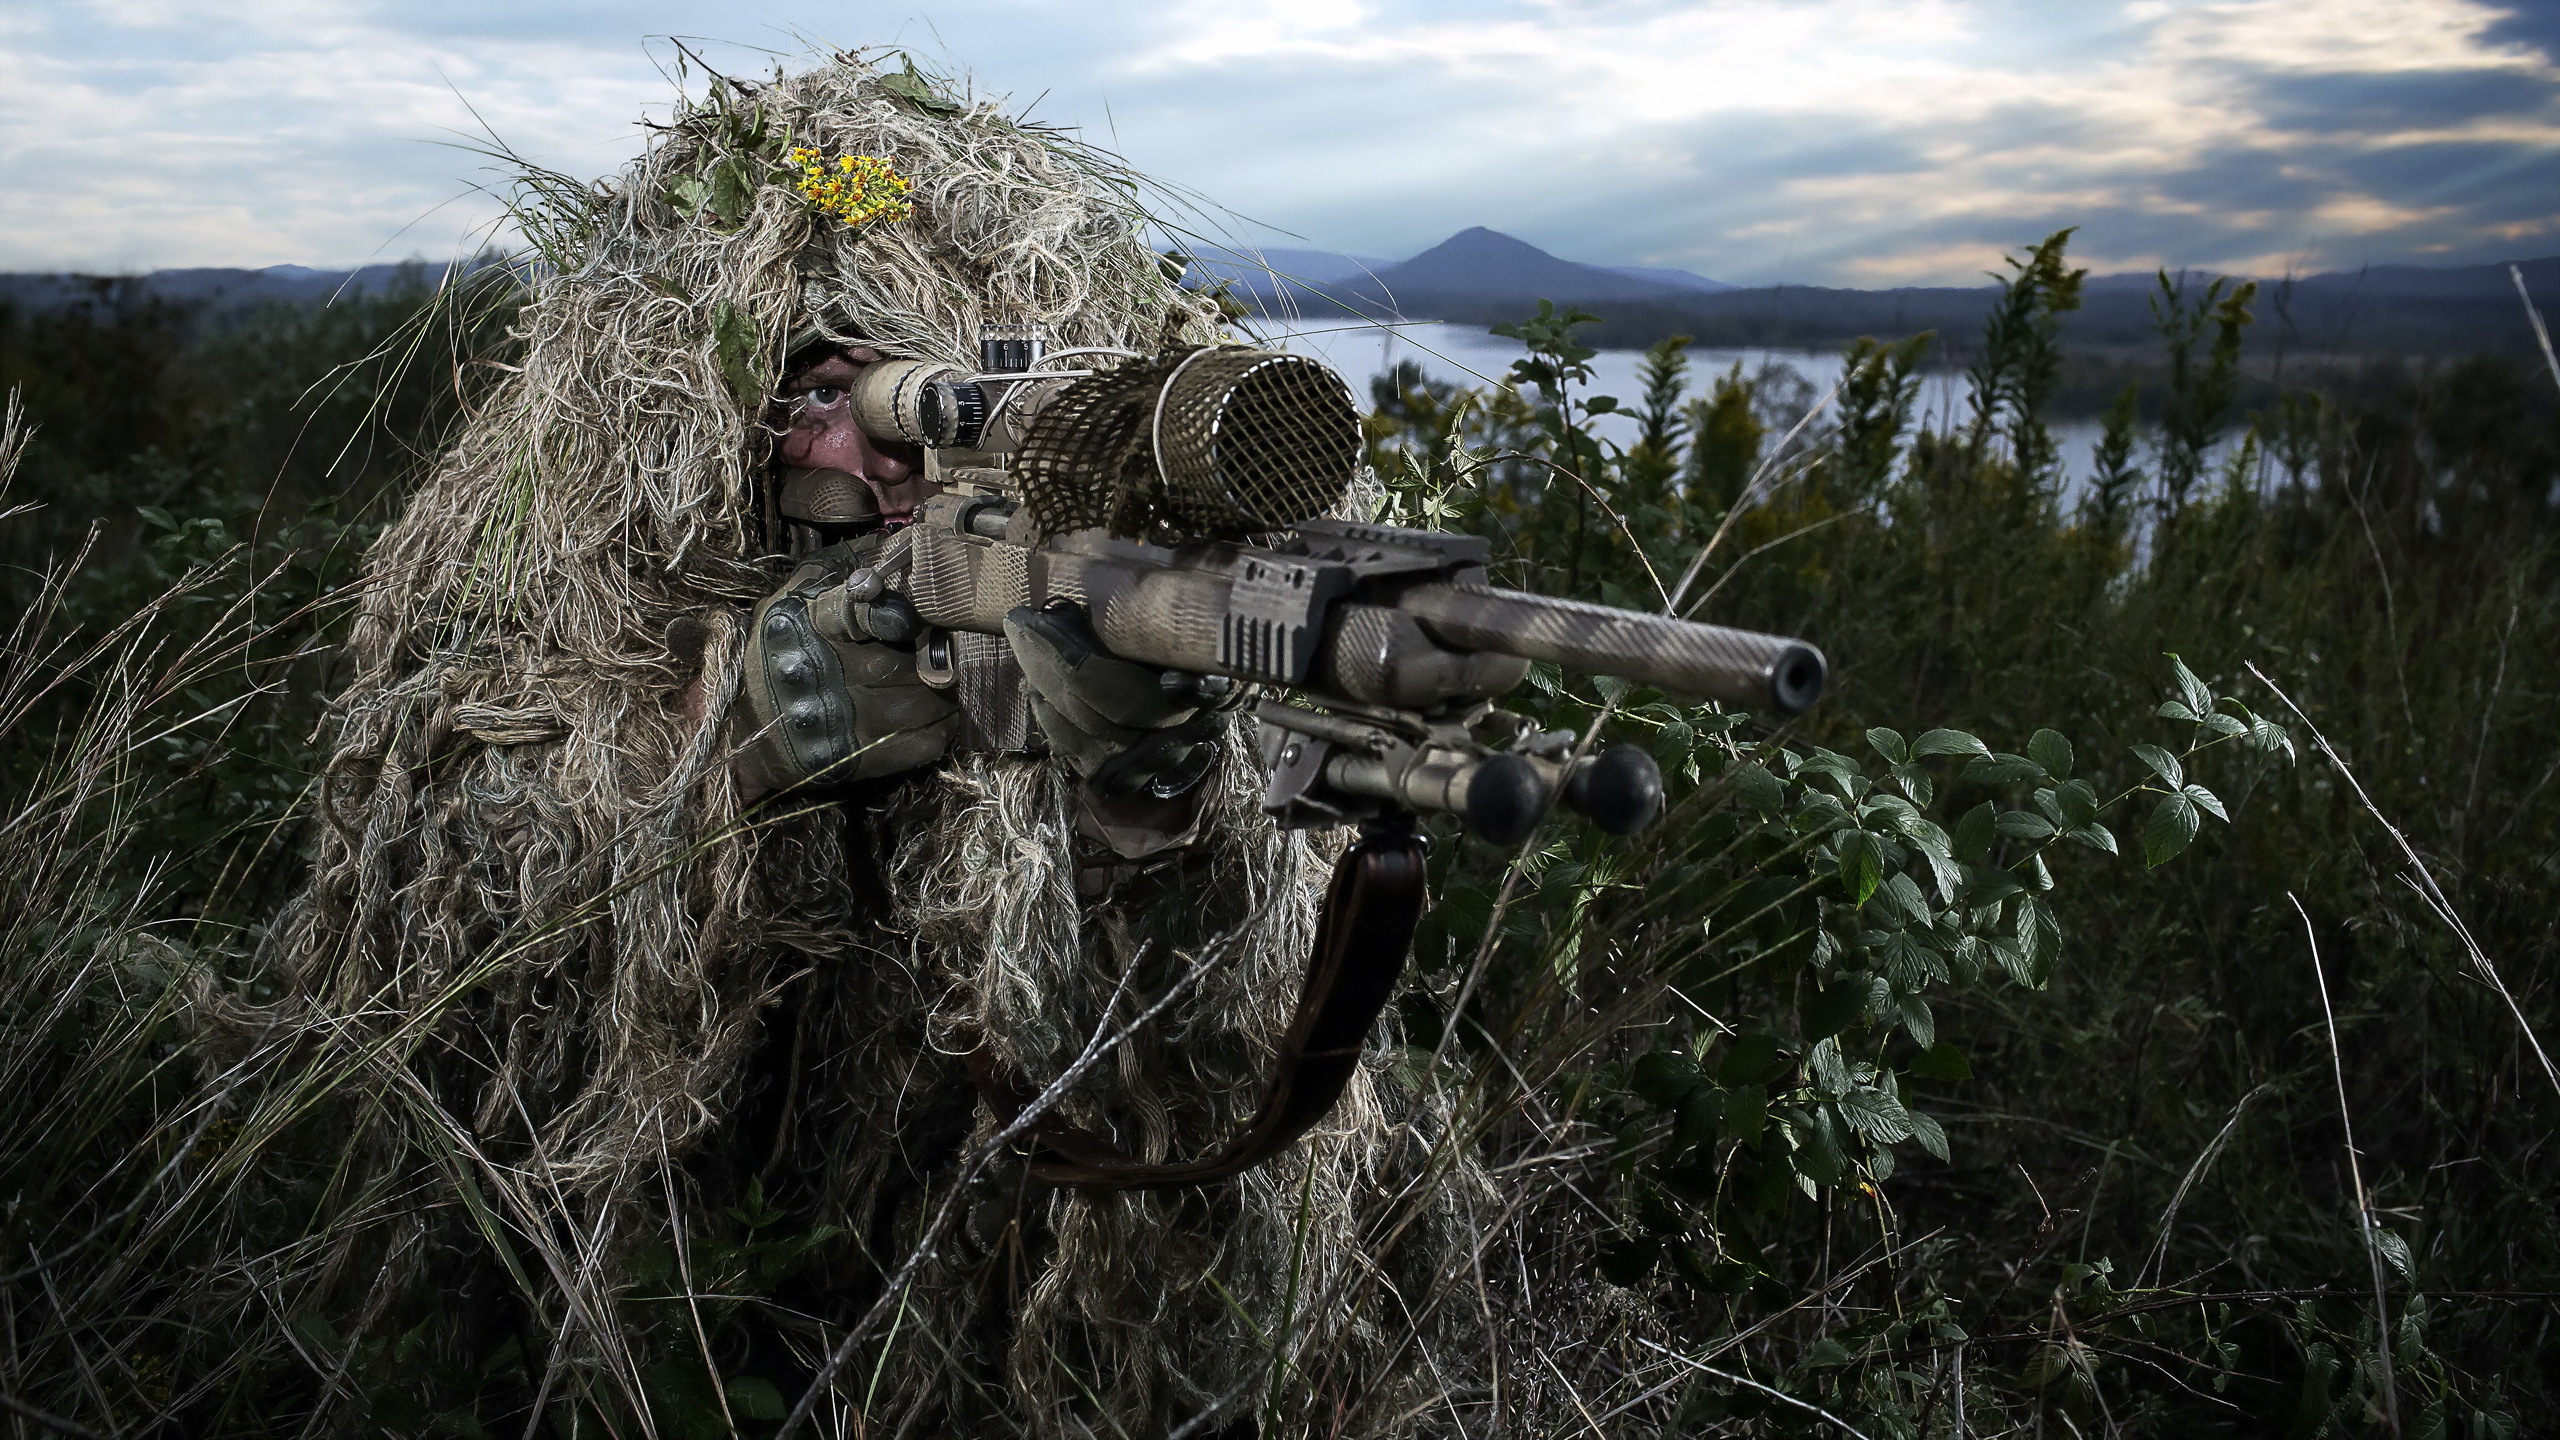 Sniper rifle soldier weapon gun military d wallpaper 2560x1440